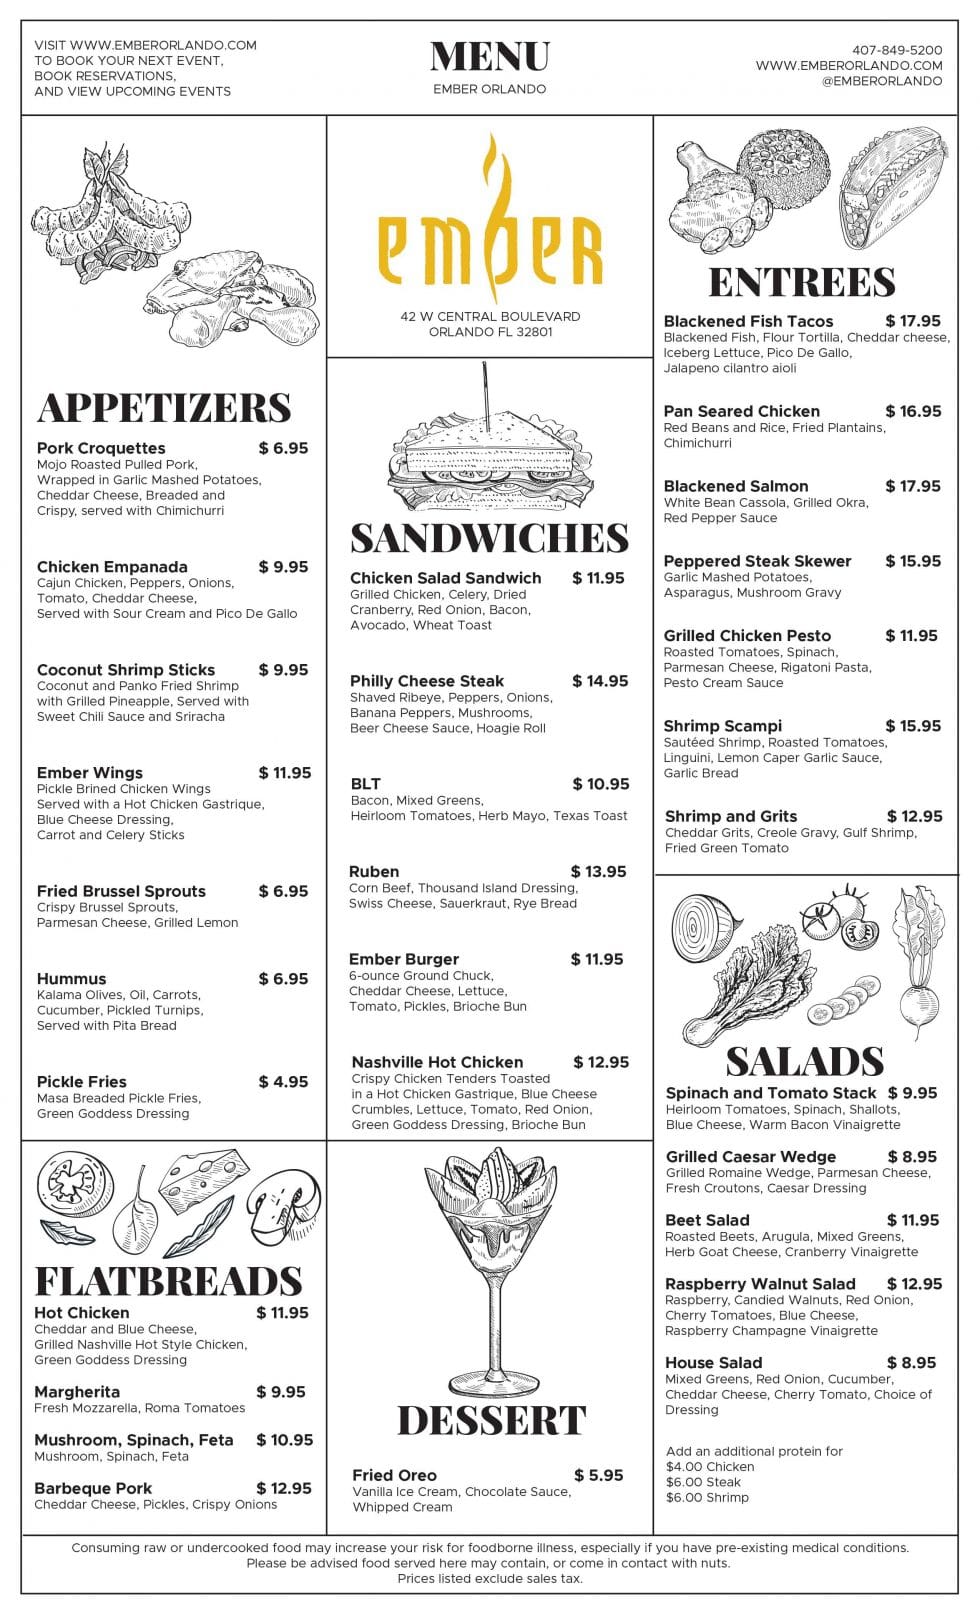 ember restaurant menu